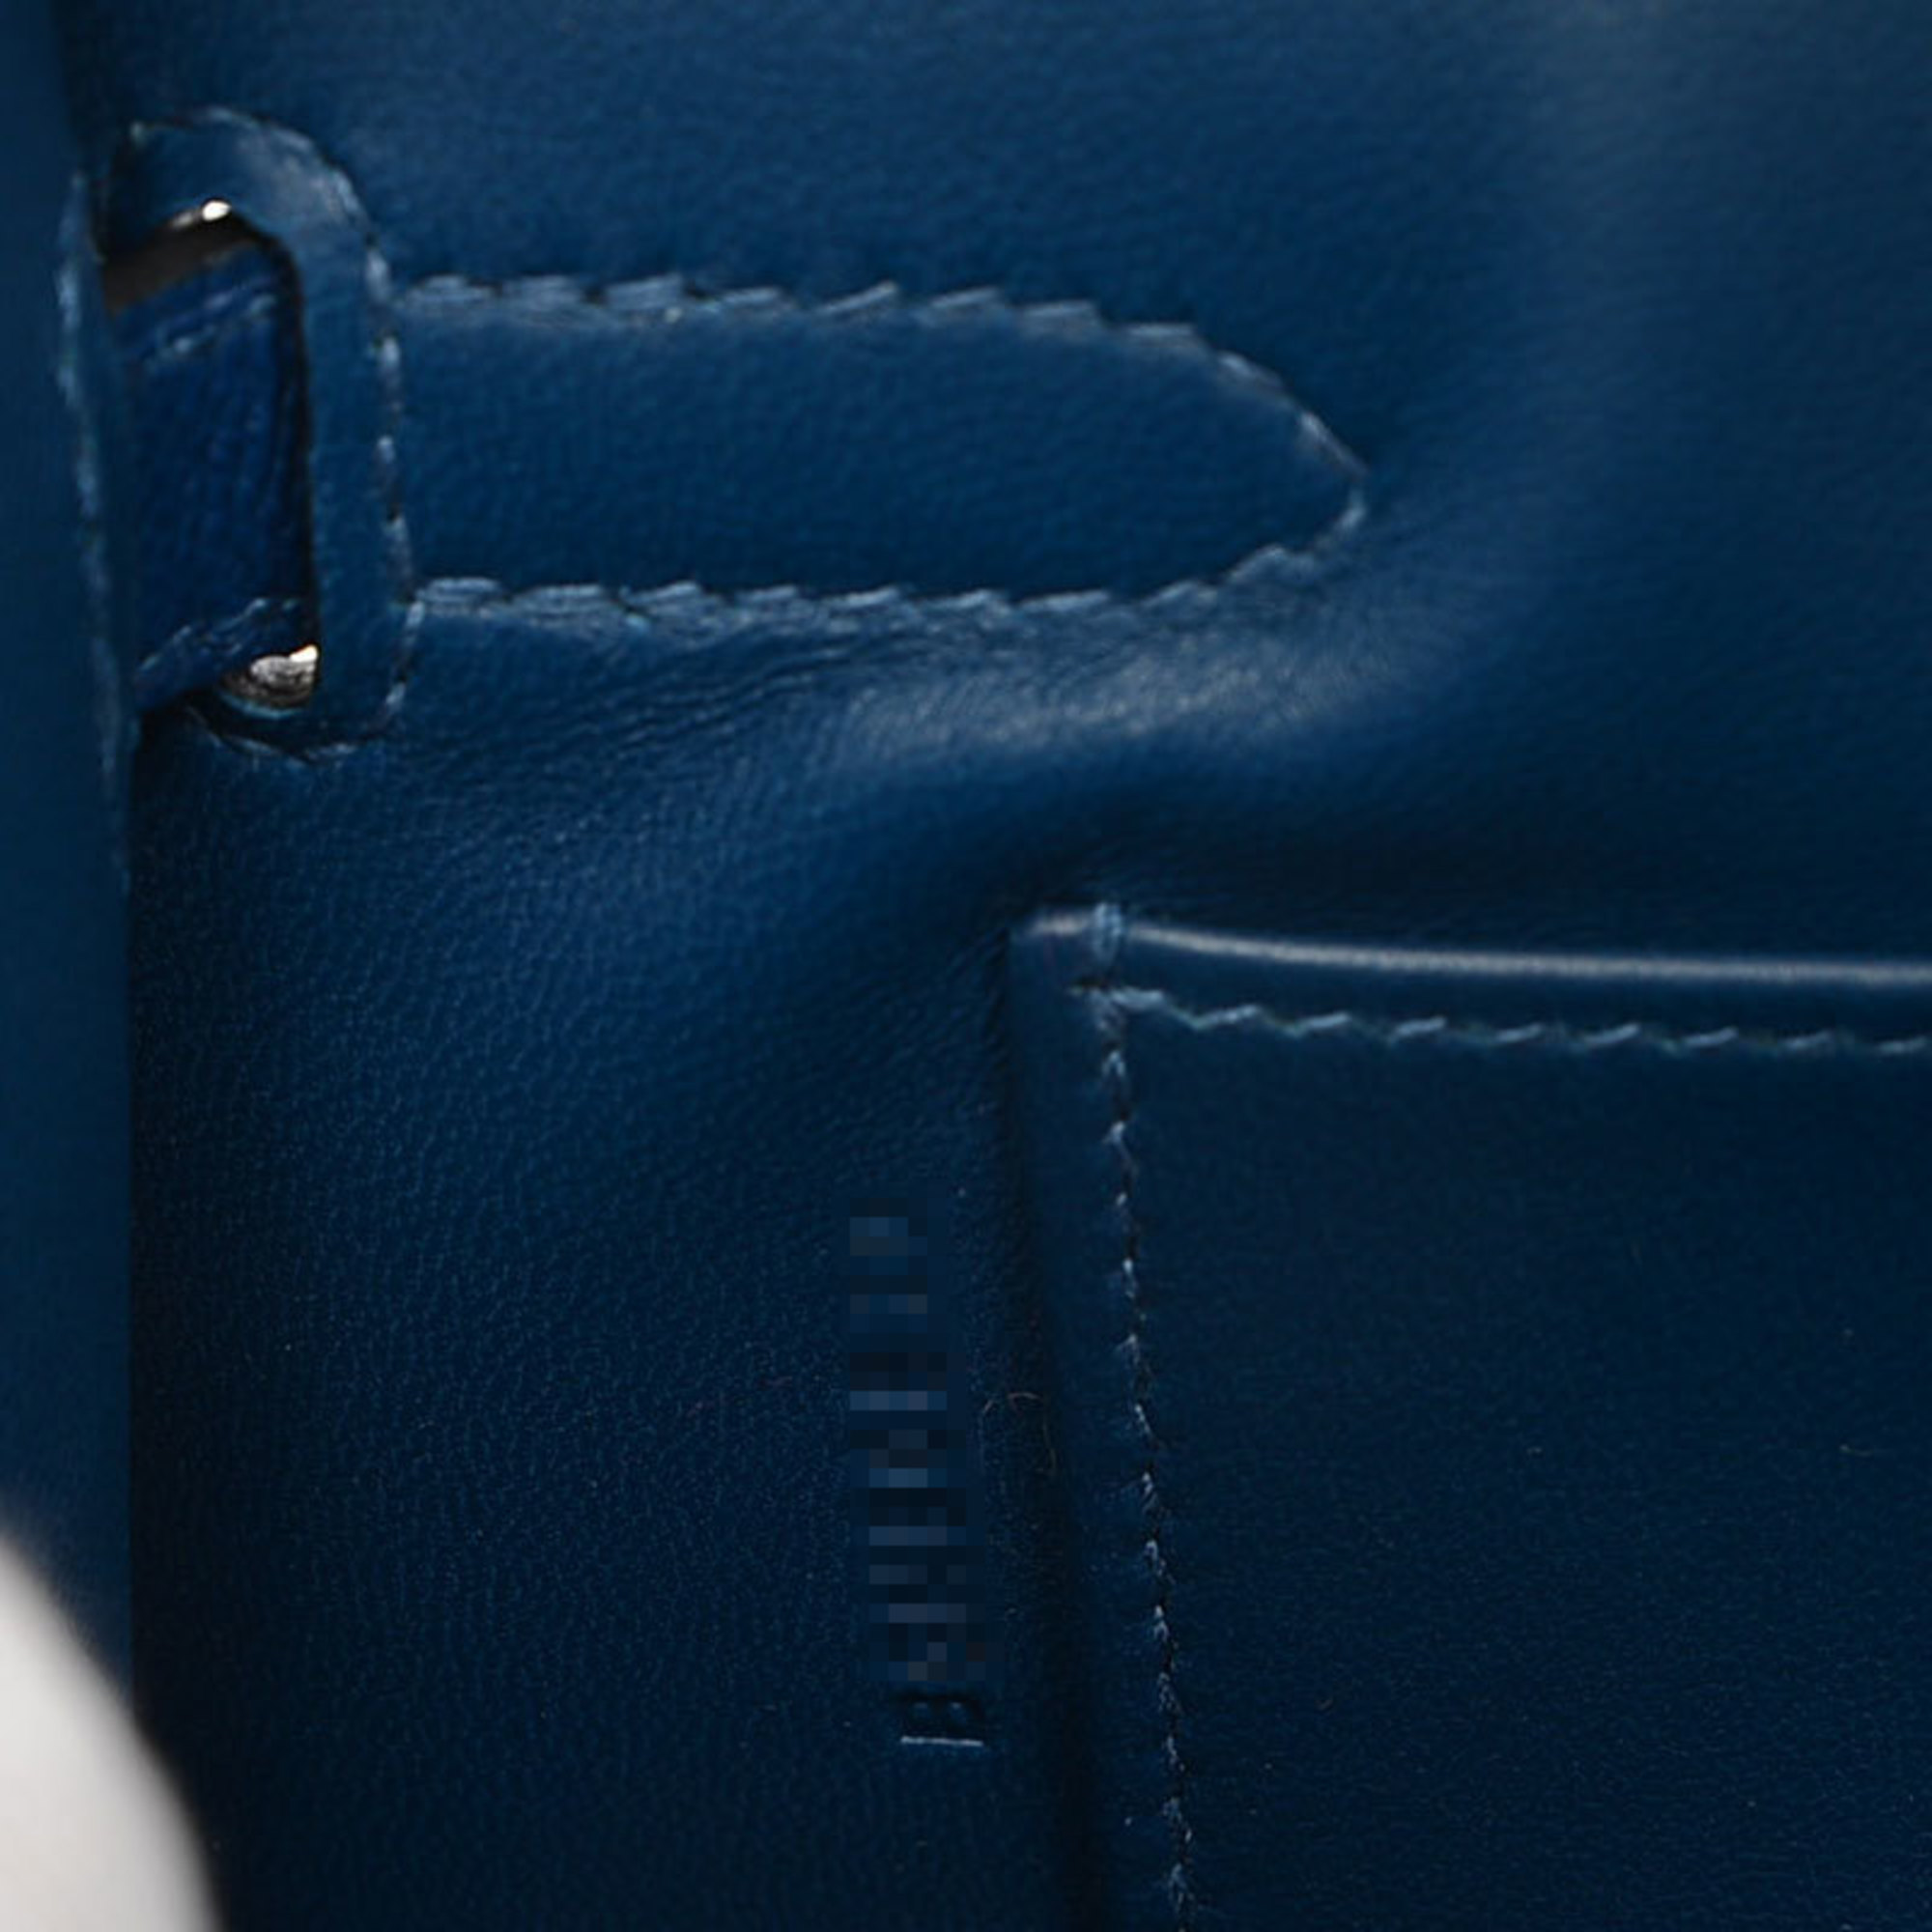 Hermes Kelly Elan Handbag Vaux Madame Deep Blue Silver Hardware B Engraved